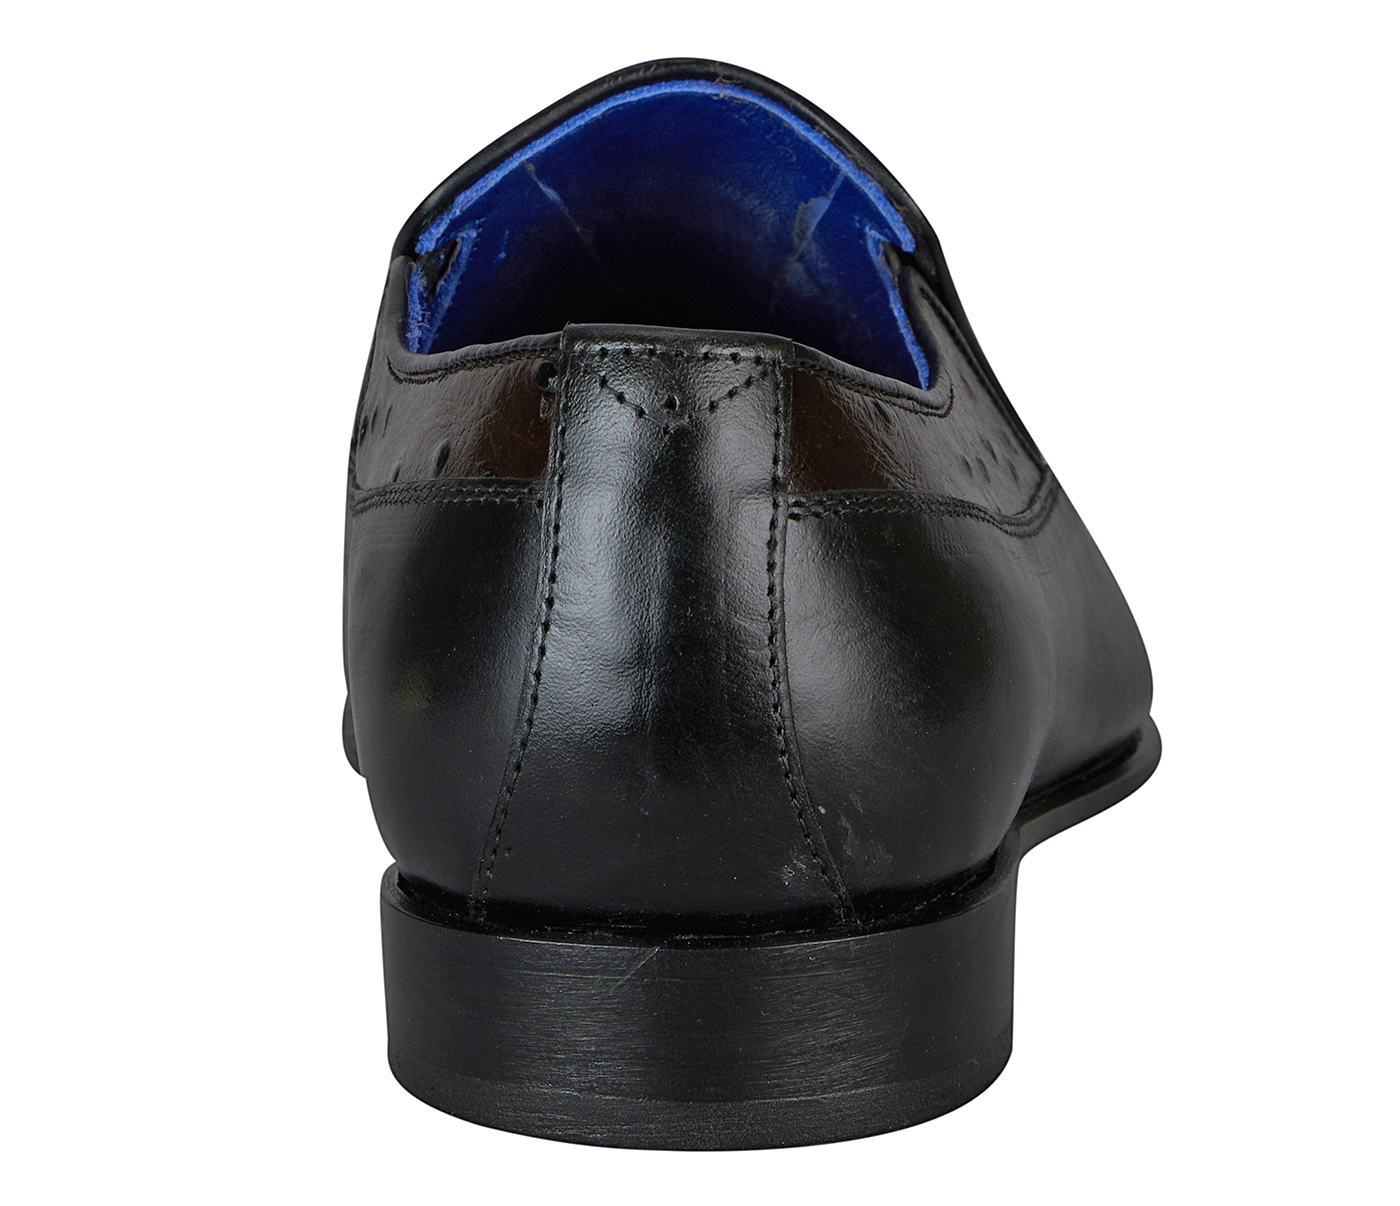 PF51-Adamis Pure Leather Footwear For Men- - Black/Brown